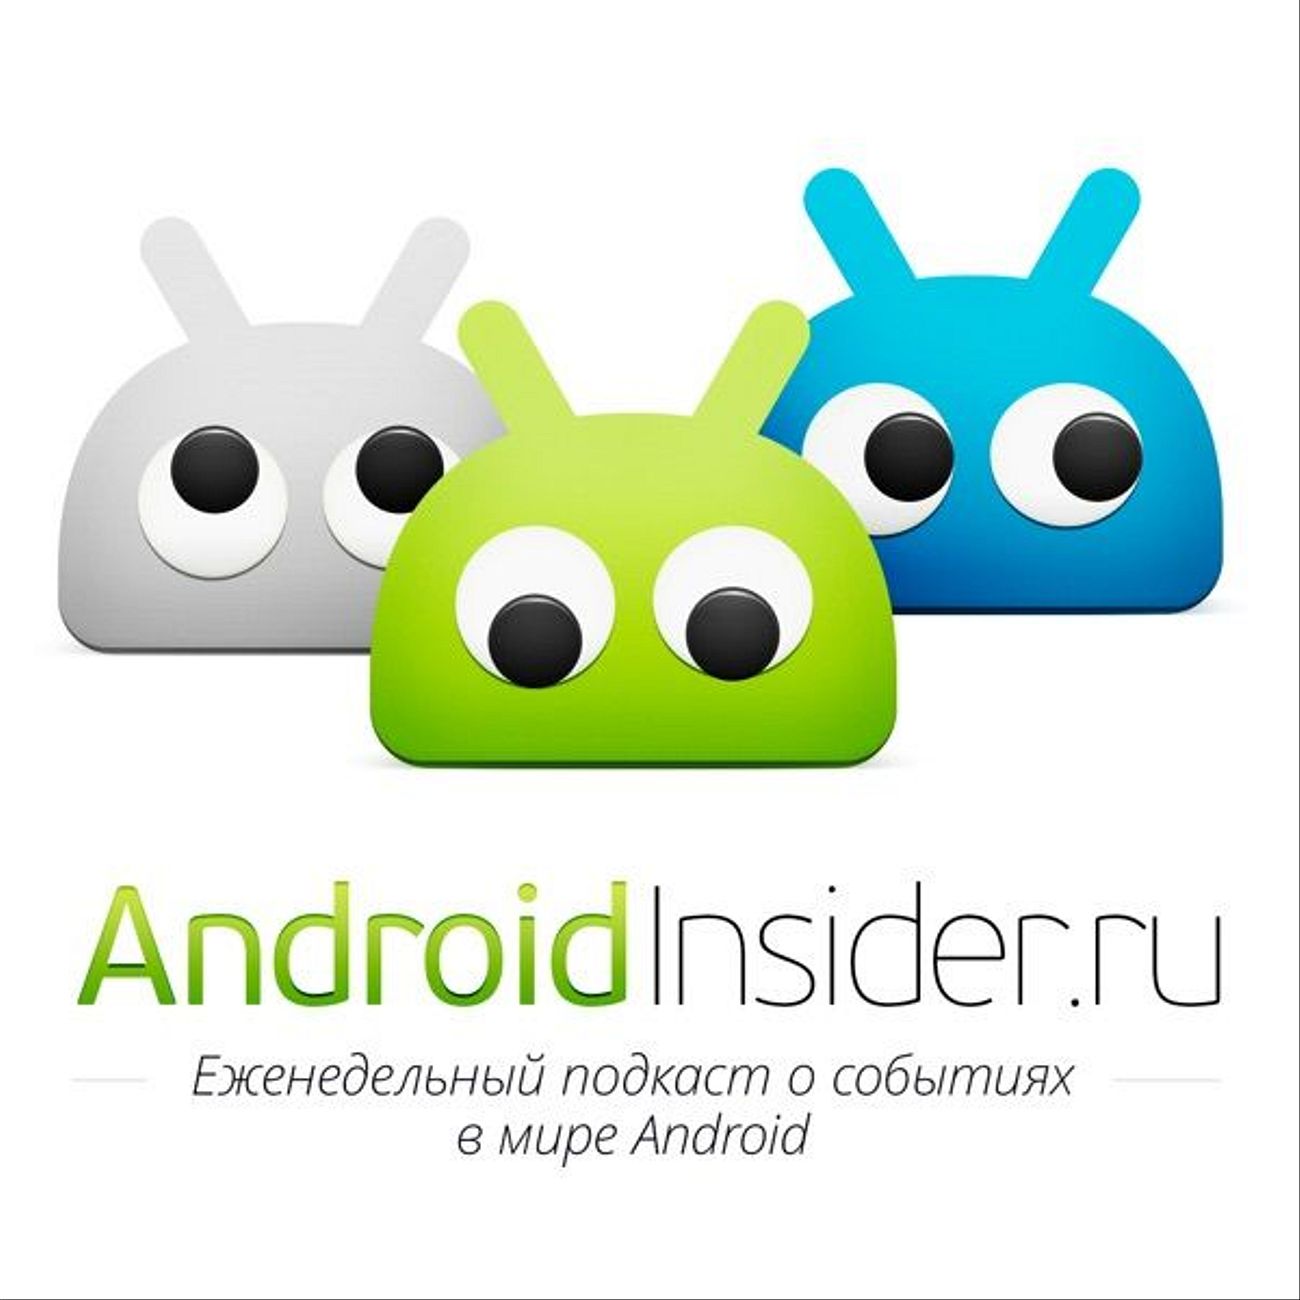 AndroidInsider.ru